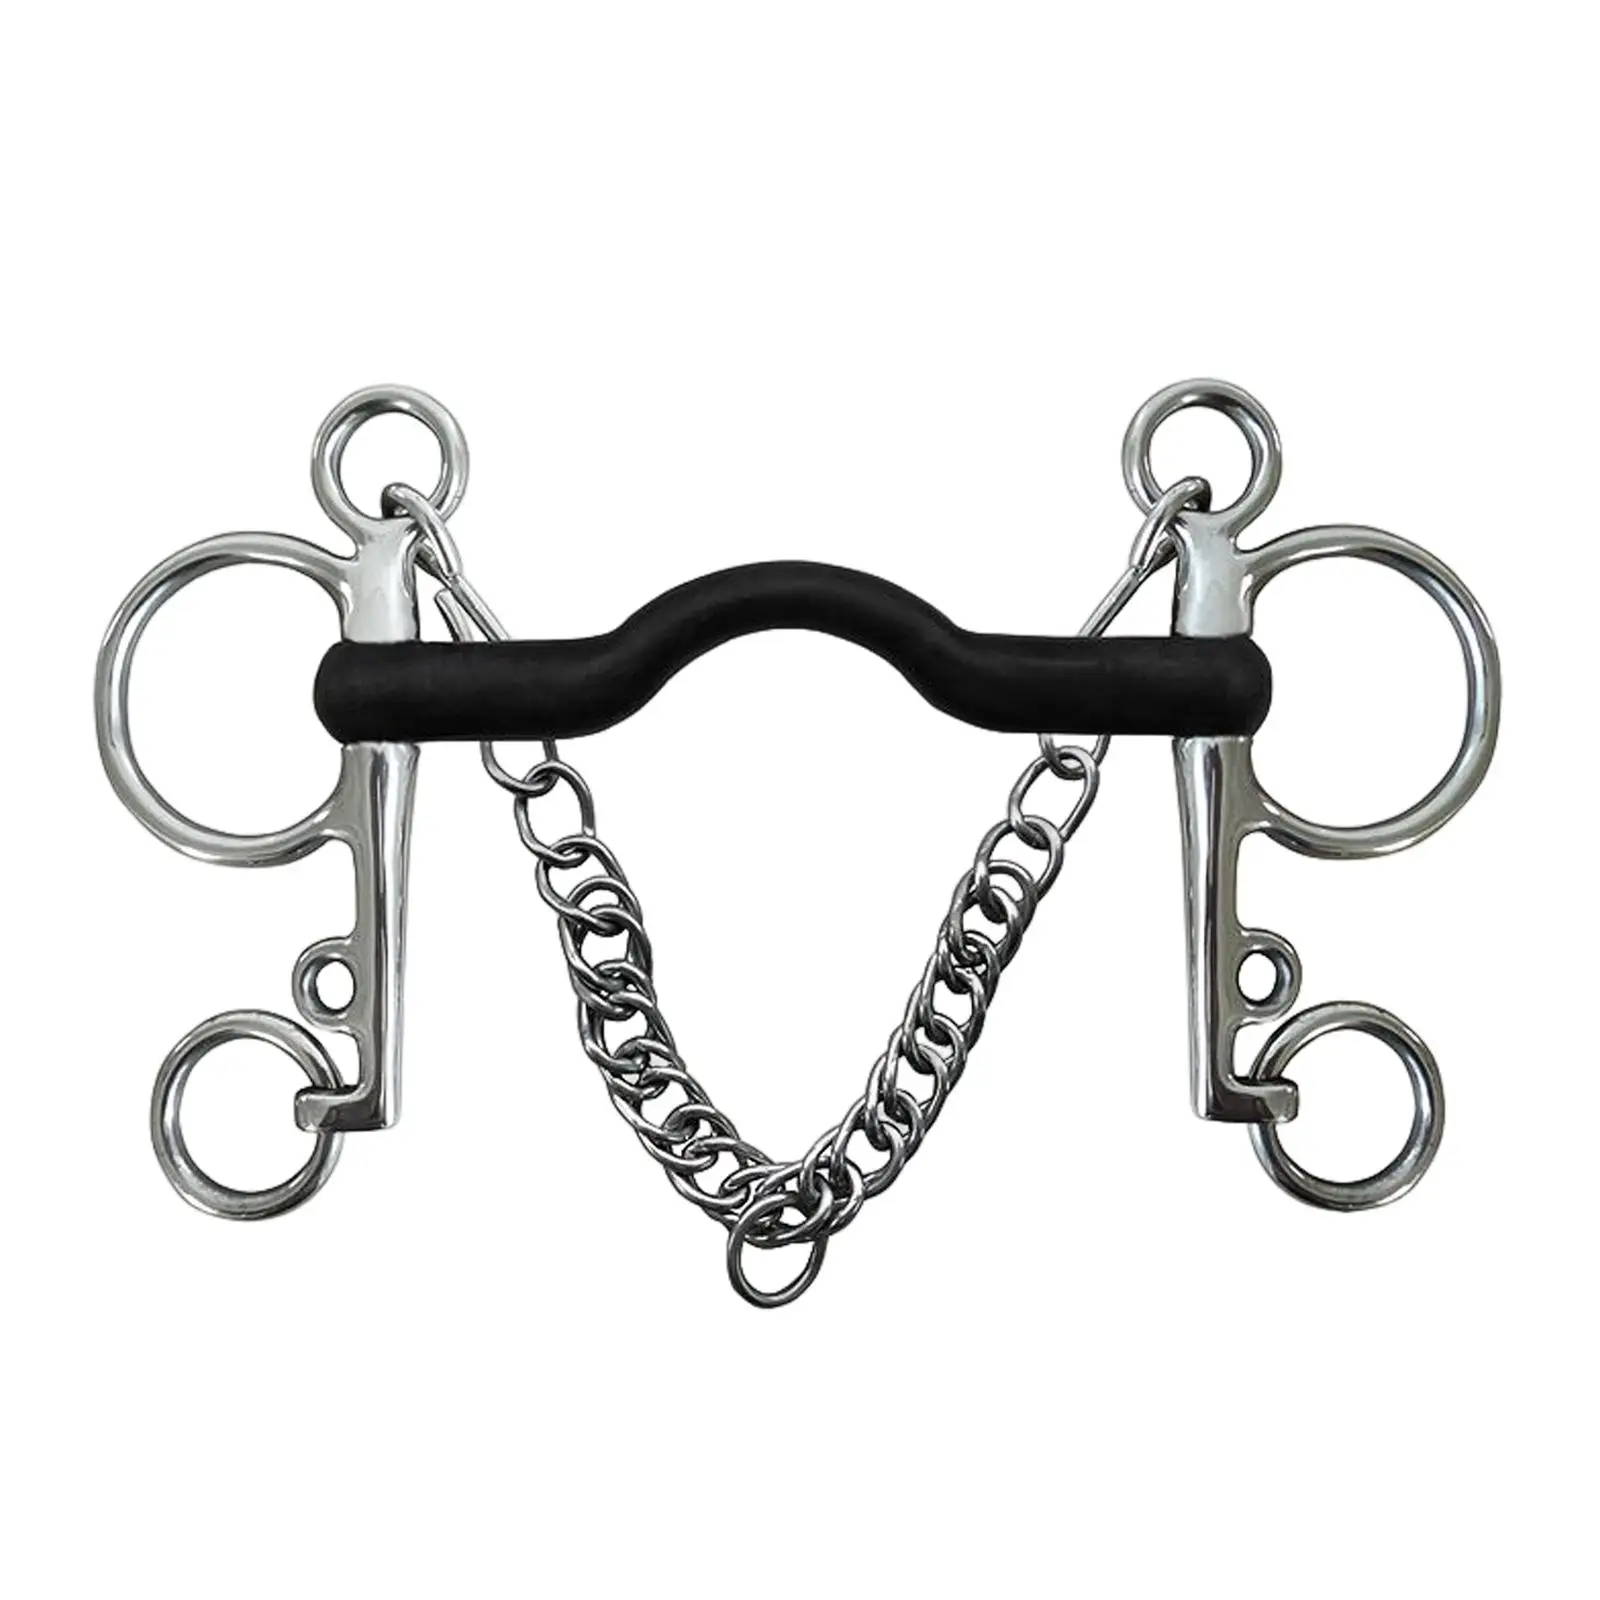 Metal, Mouth W/Curb Hooks Chain, Harness, Horse Bit, Cheek for Training Equipment Horse Bridle Performance Equestrian